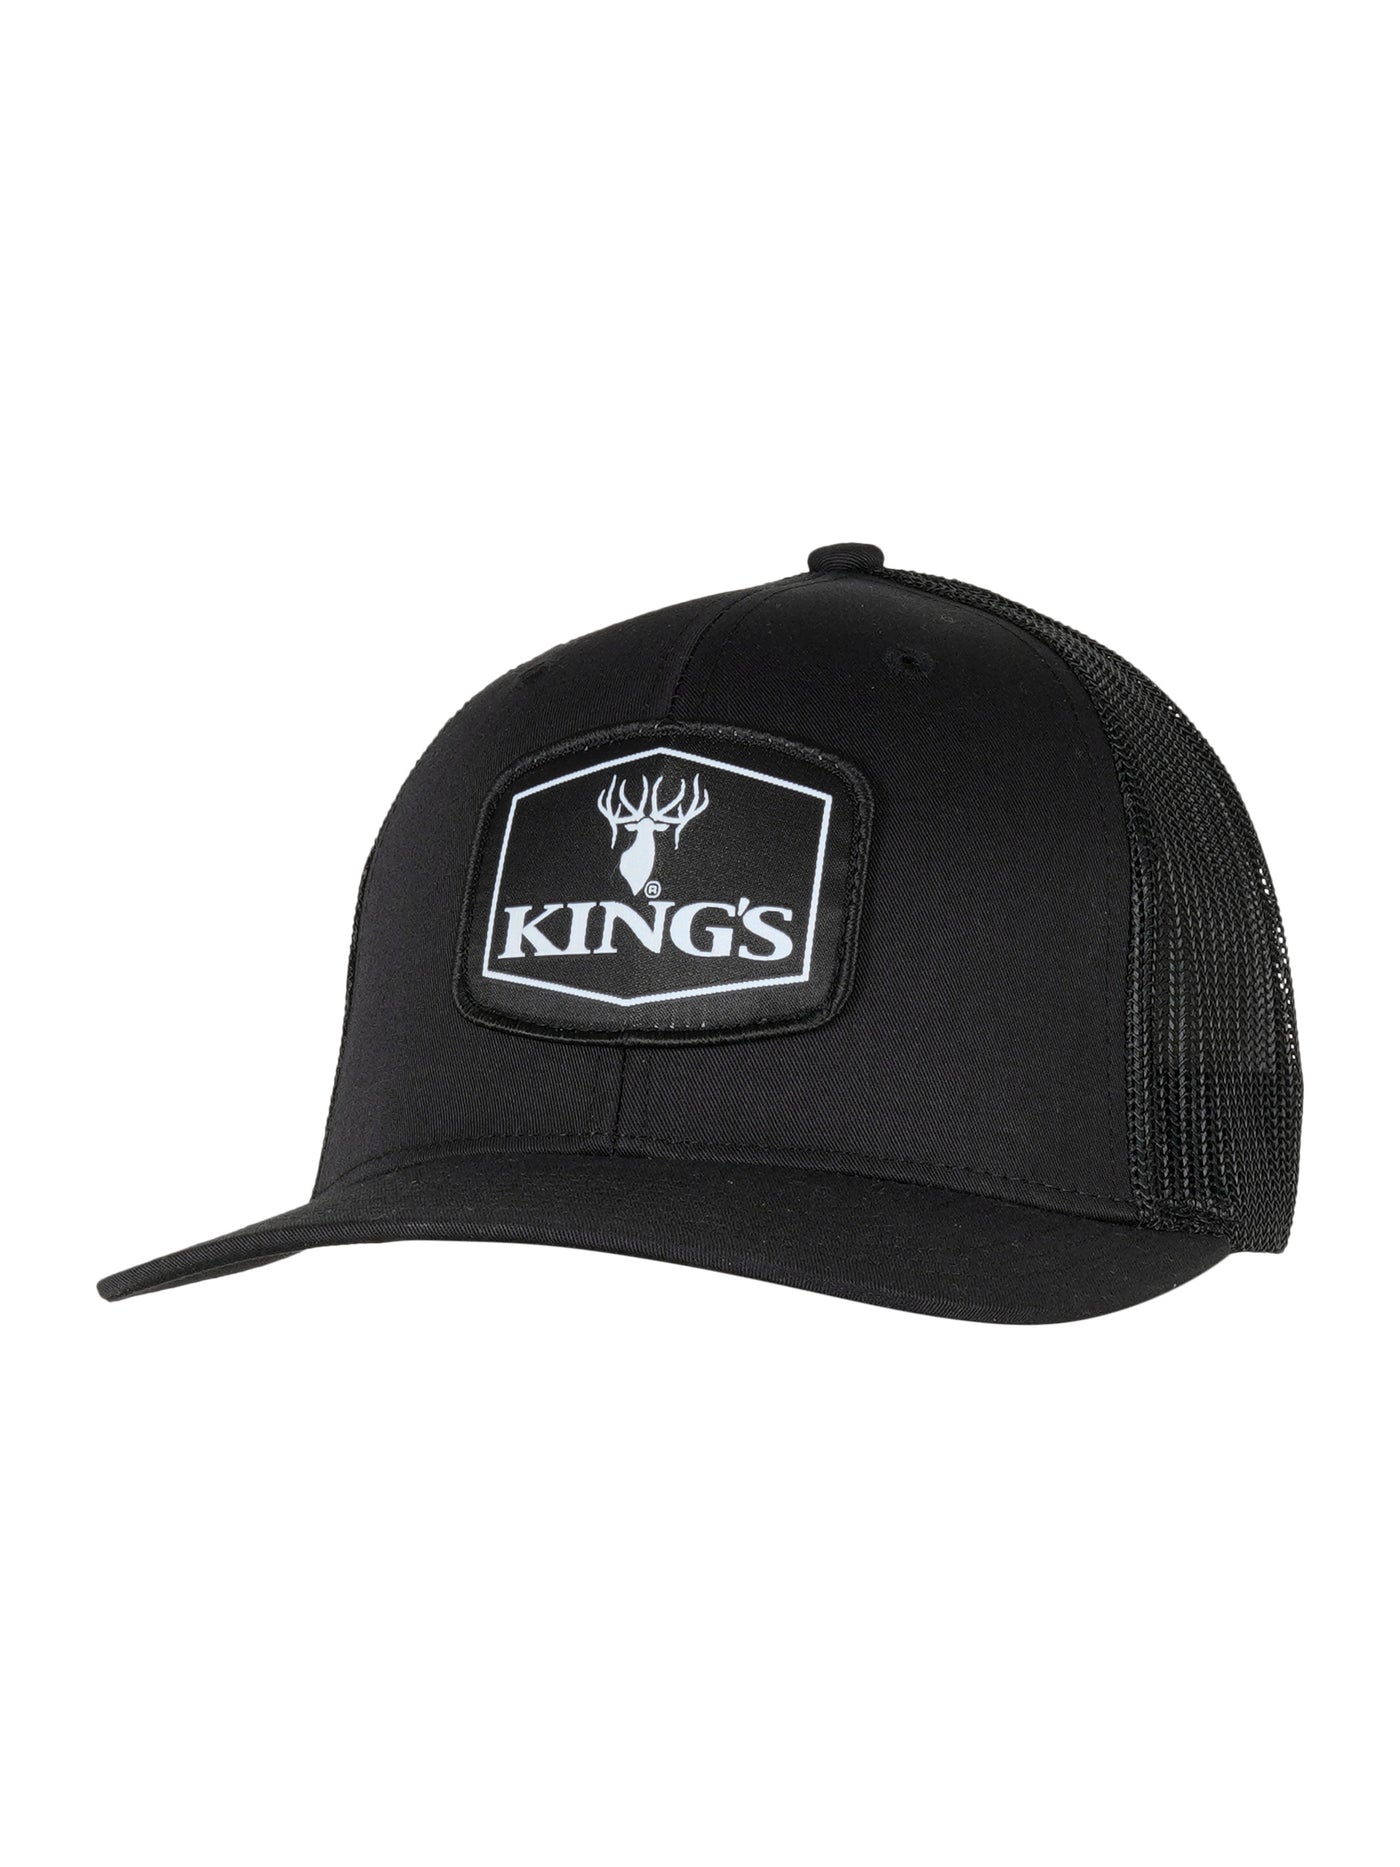 Kings Black Logo Patch Hat | Kings Camo